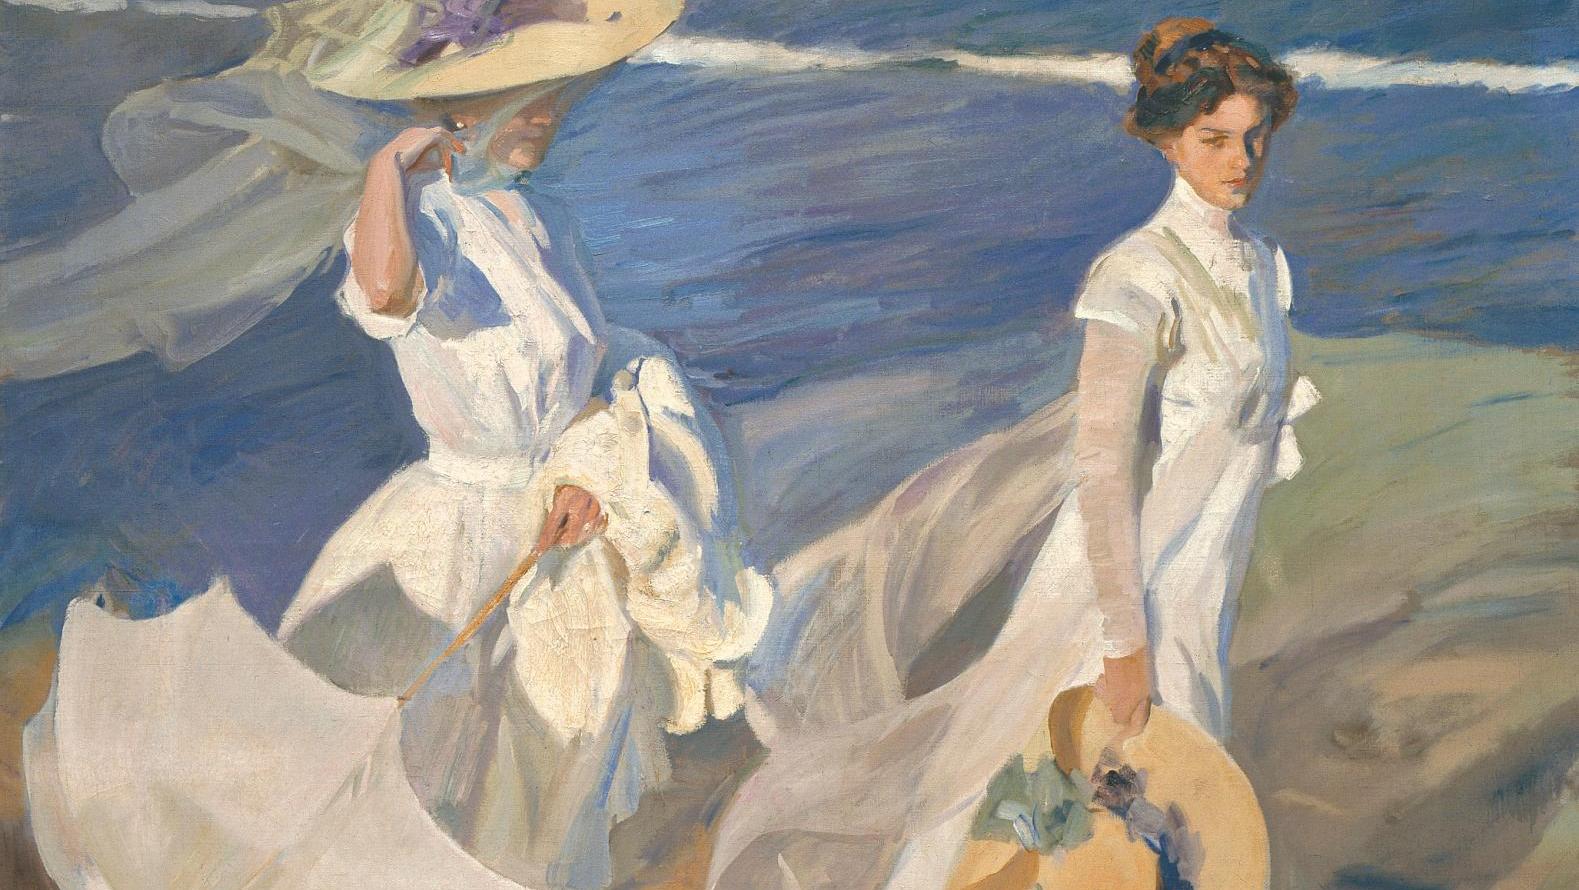 Joaquín Sorolla y Bastida (1863-1923), Walk on the Beach, oil on canvas, 205 x 200... Sorolla, Master of Light